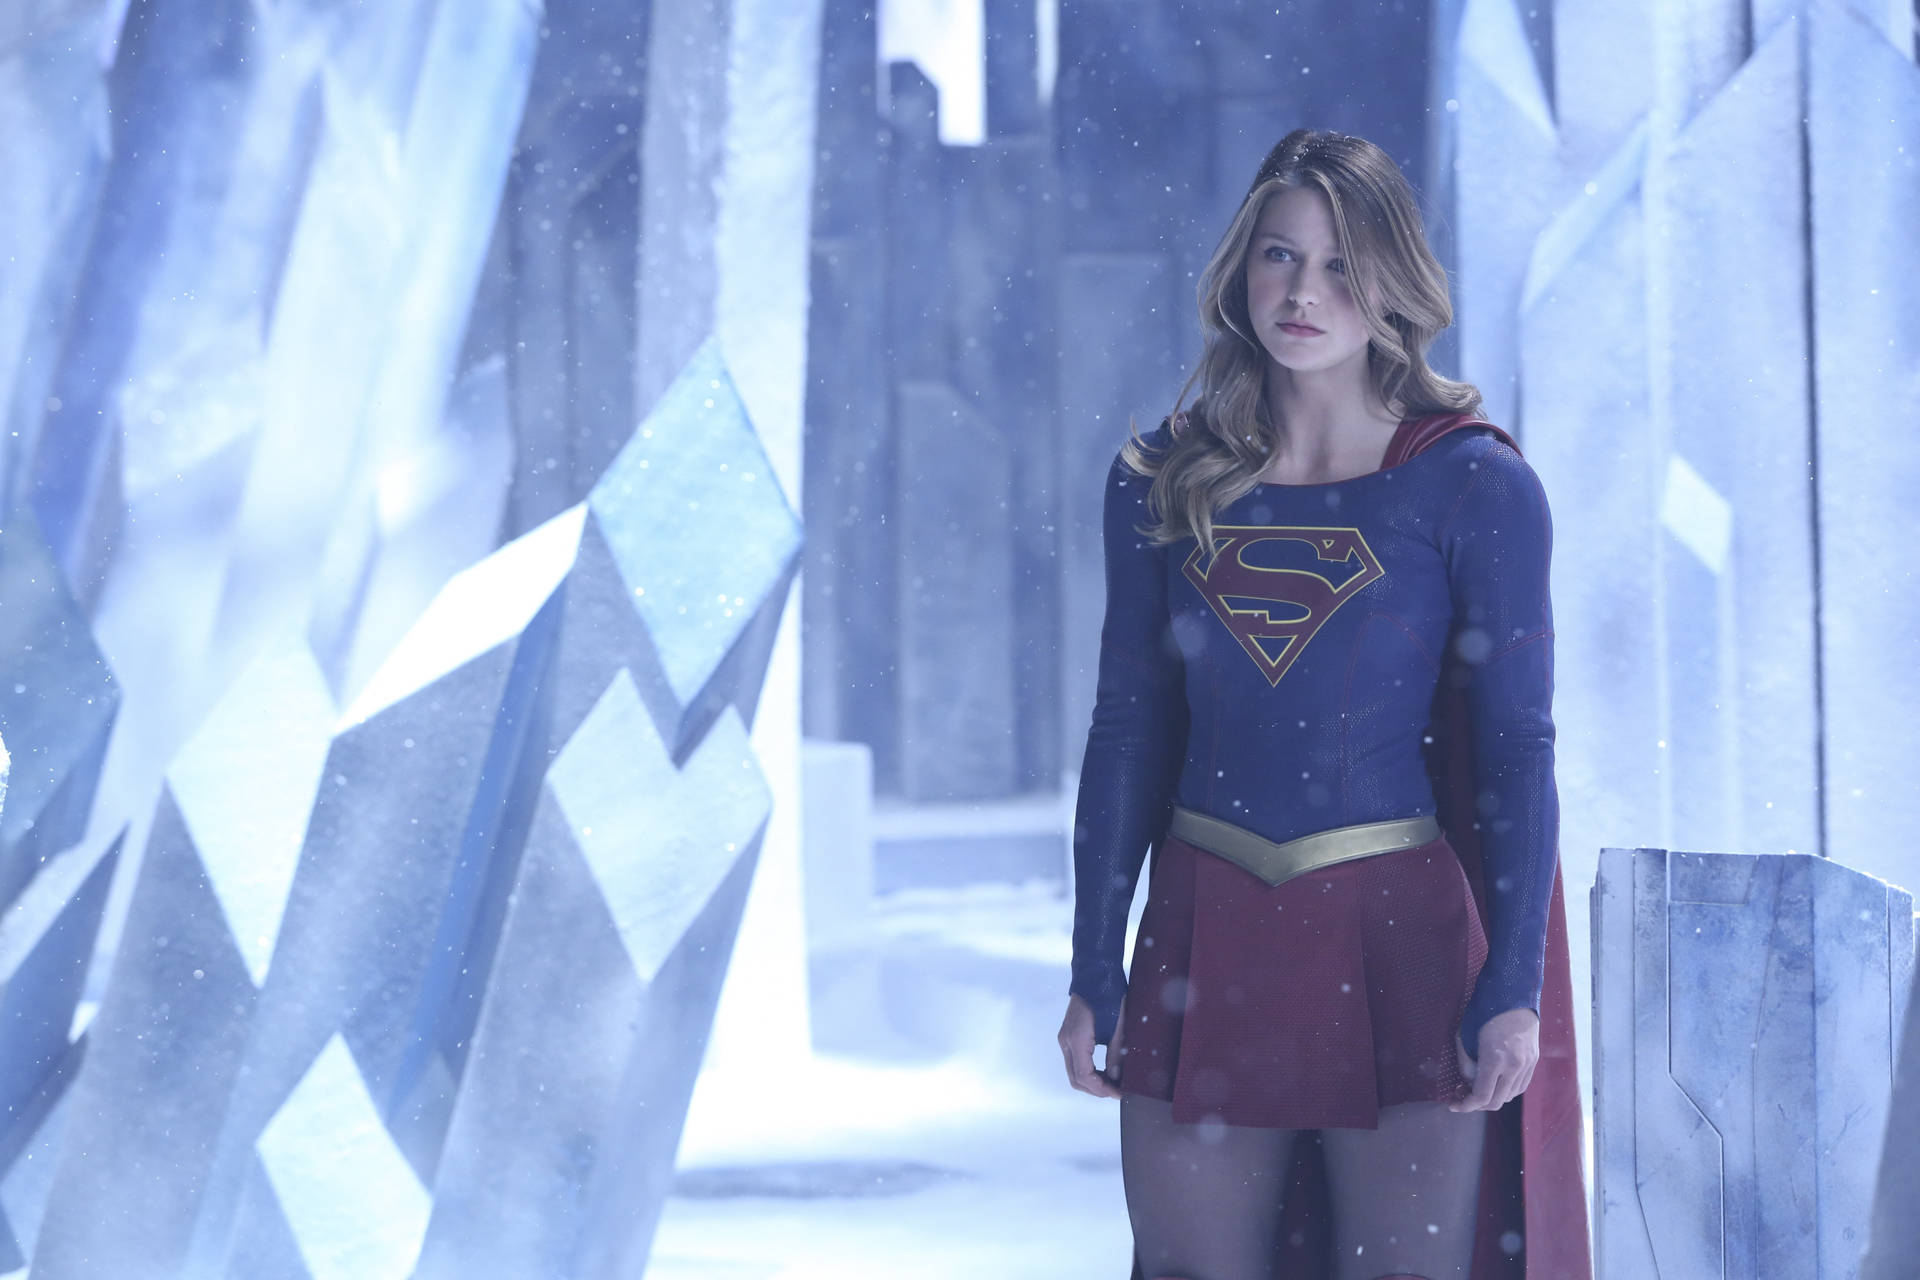 Melissa Benoist In Superhero Attire, Showcasing Her Role As Supergirl. Background